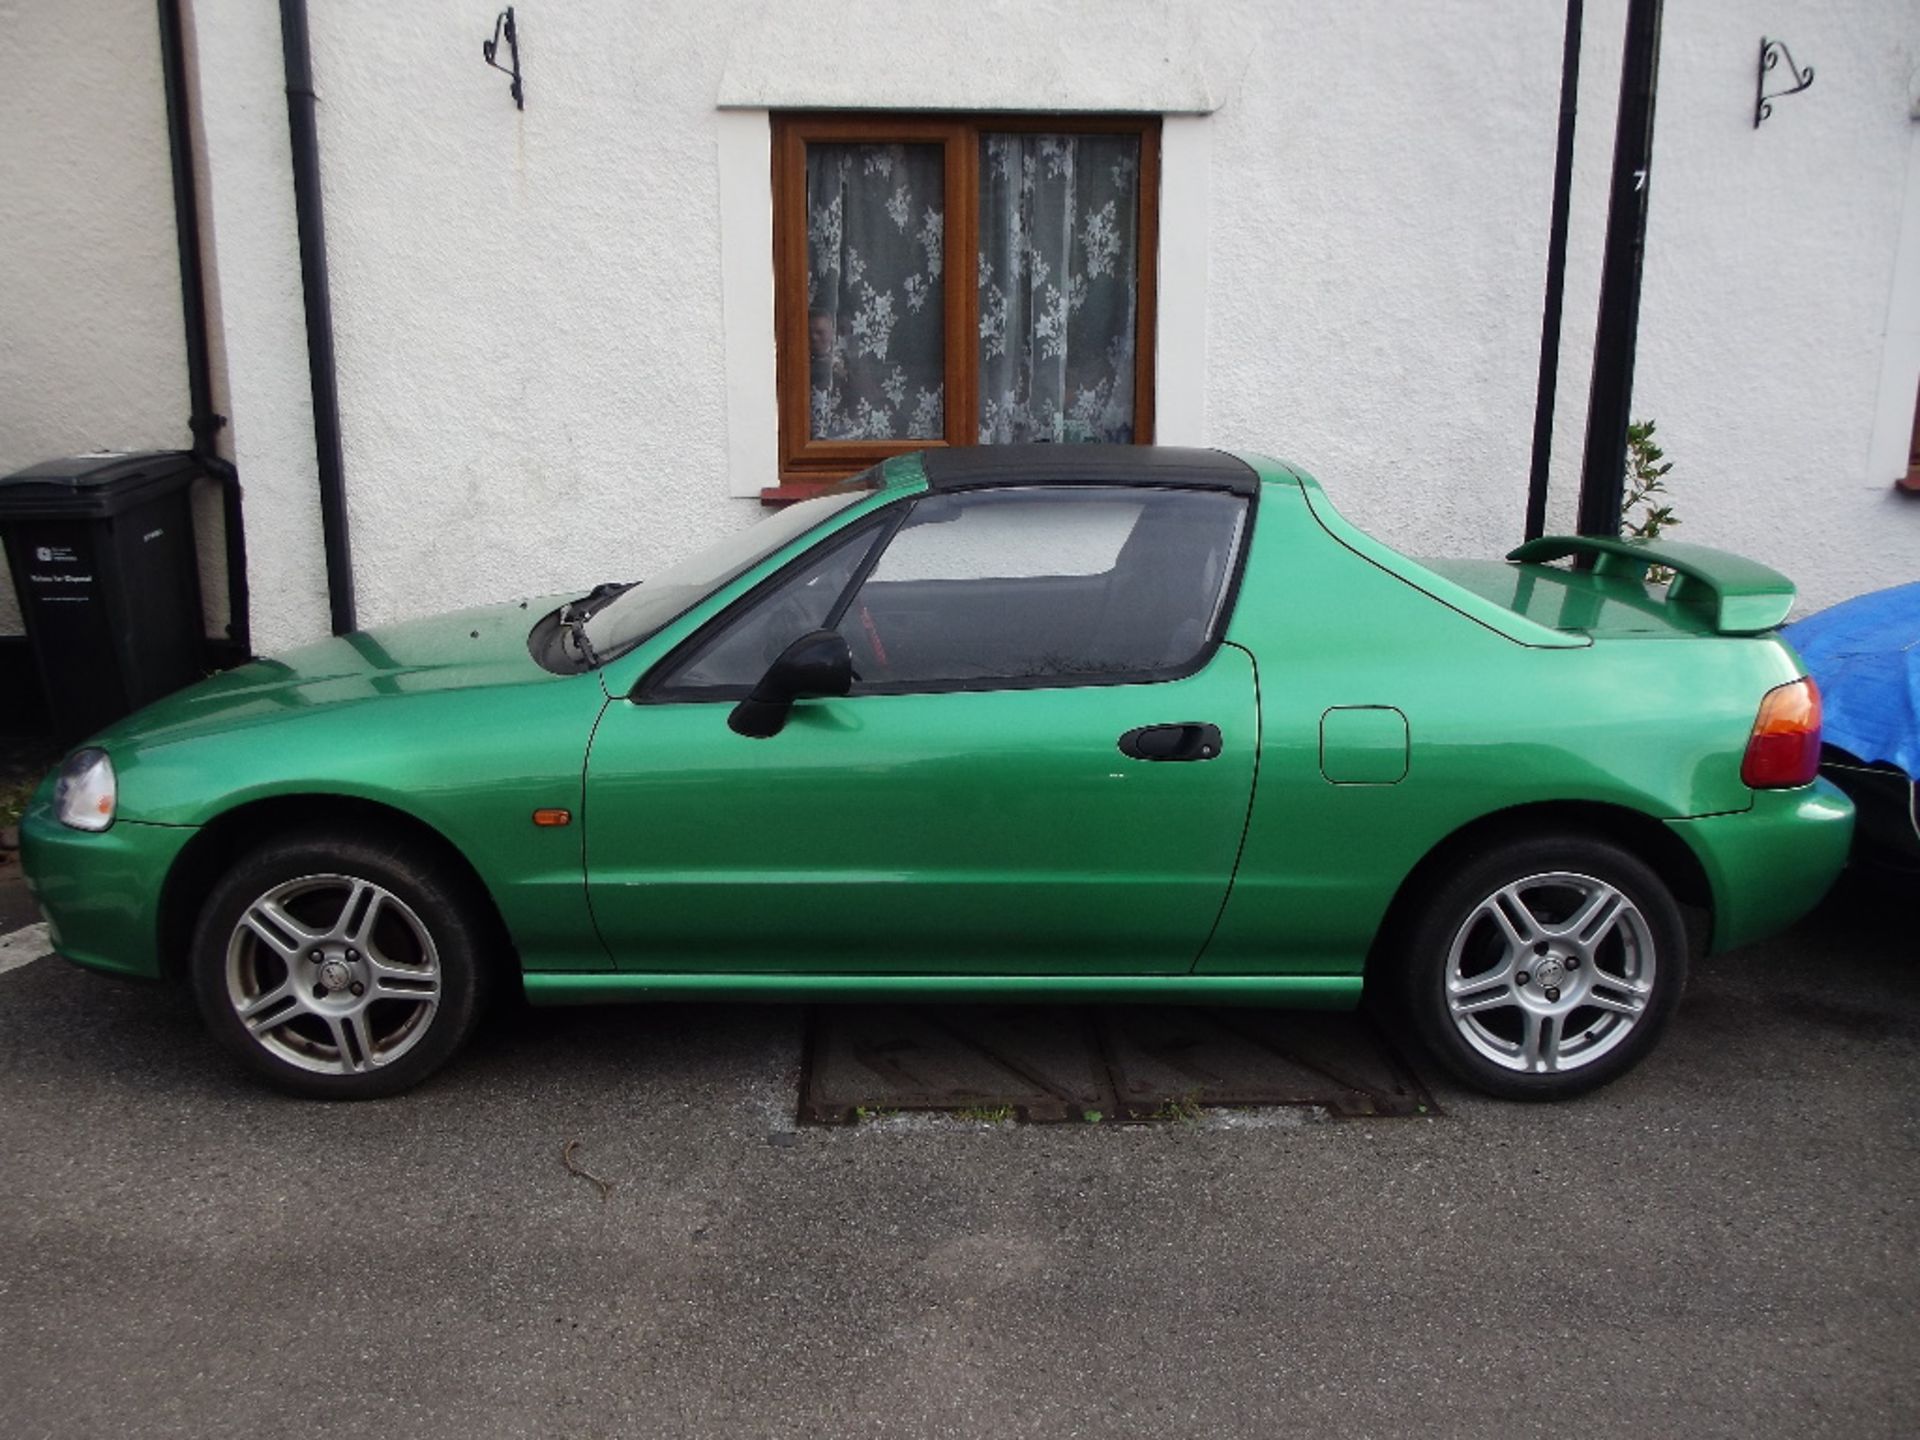 A 1993 Honda CRX, registration number L342 BPK, green. - Image 2 of 5